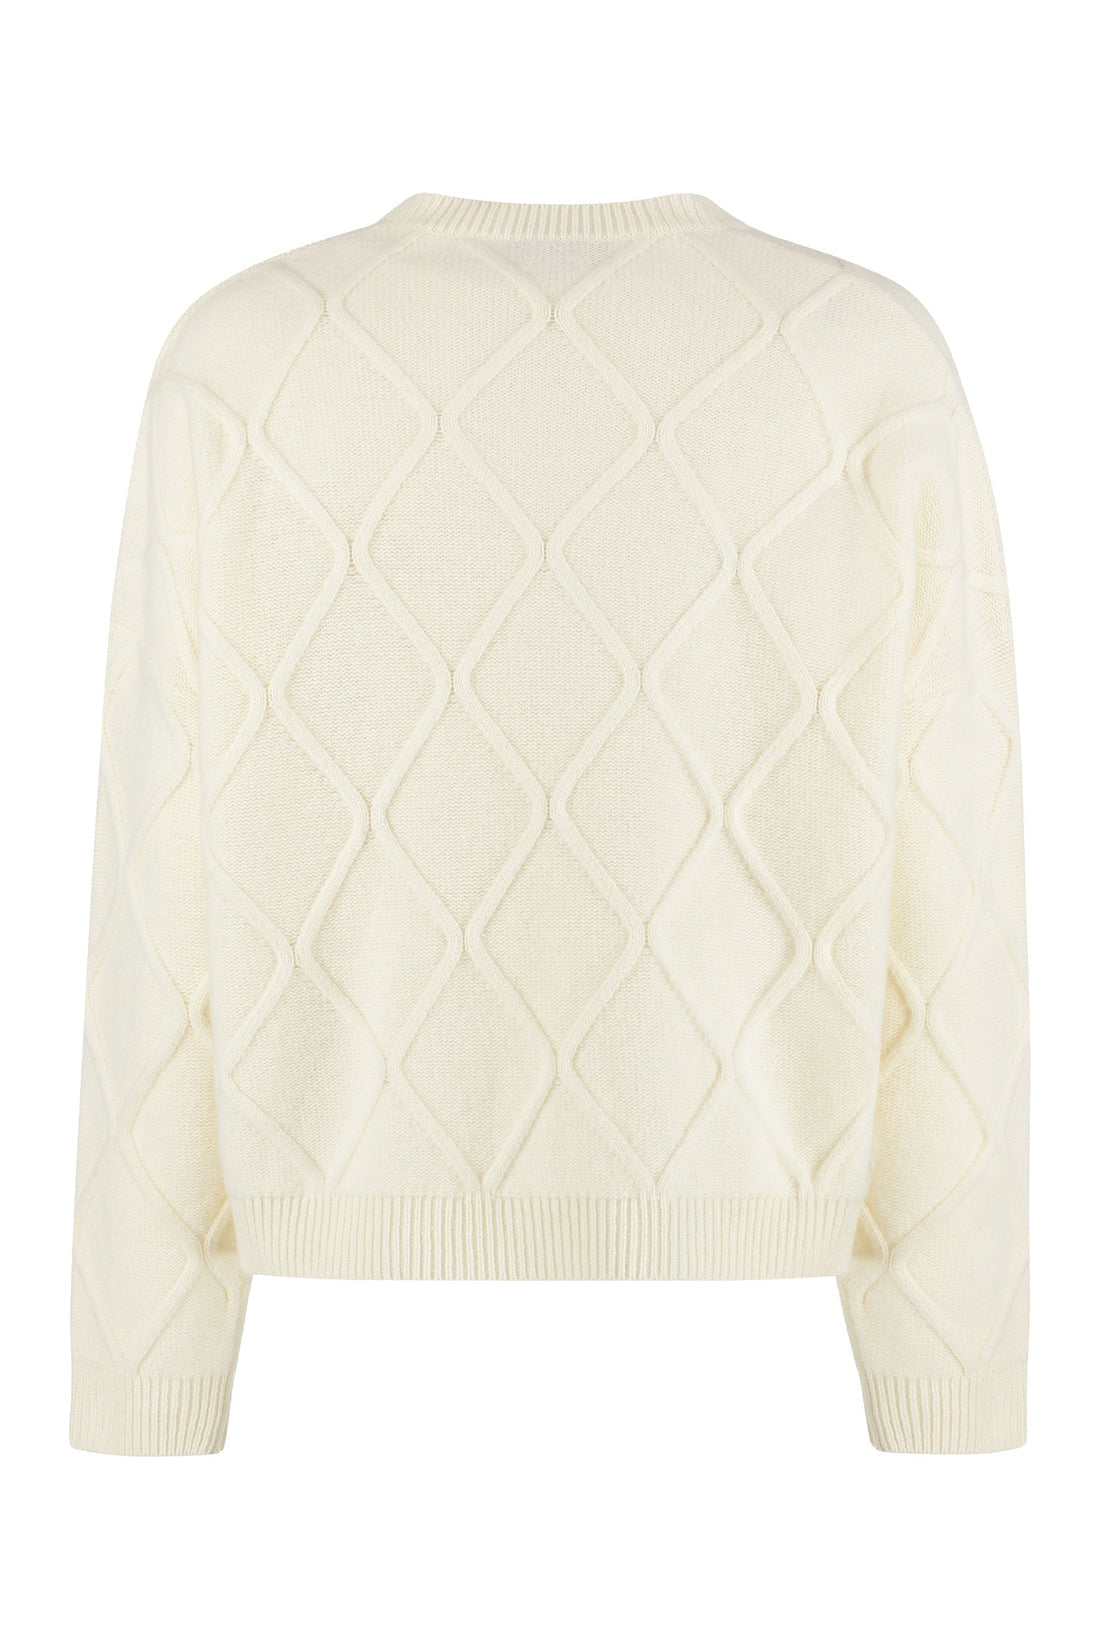 Valentino-OUTLET-SALE-Virgin wool crew-neck sweater-ARCHIVIST